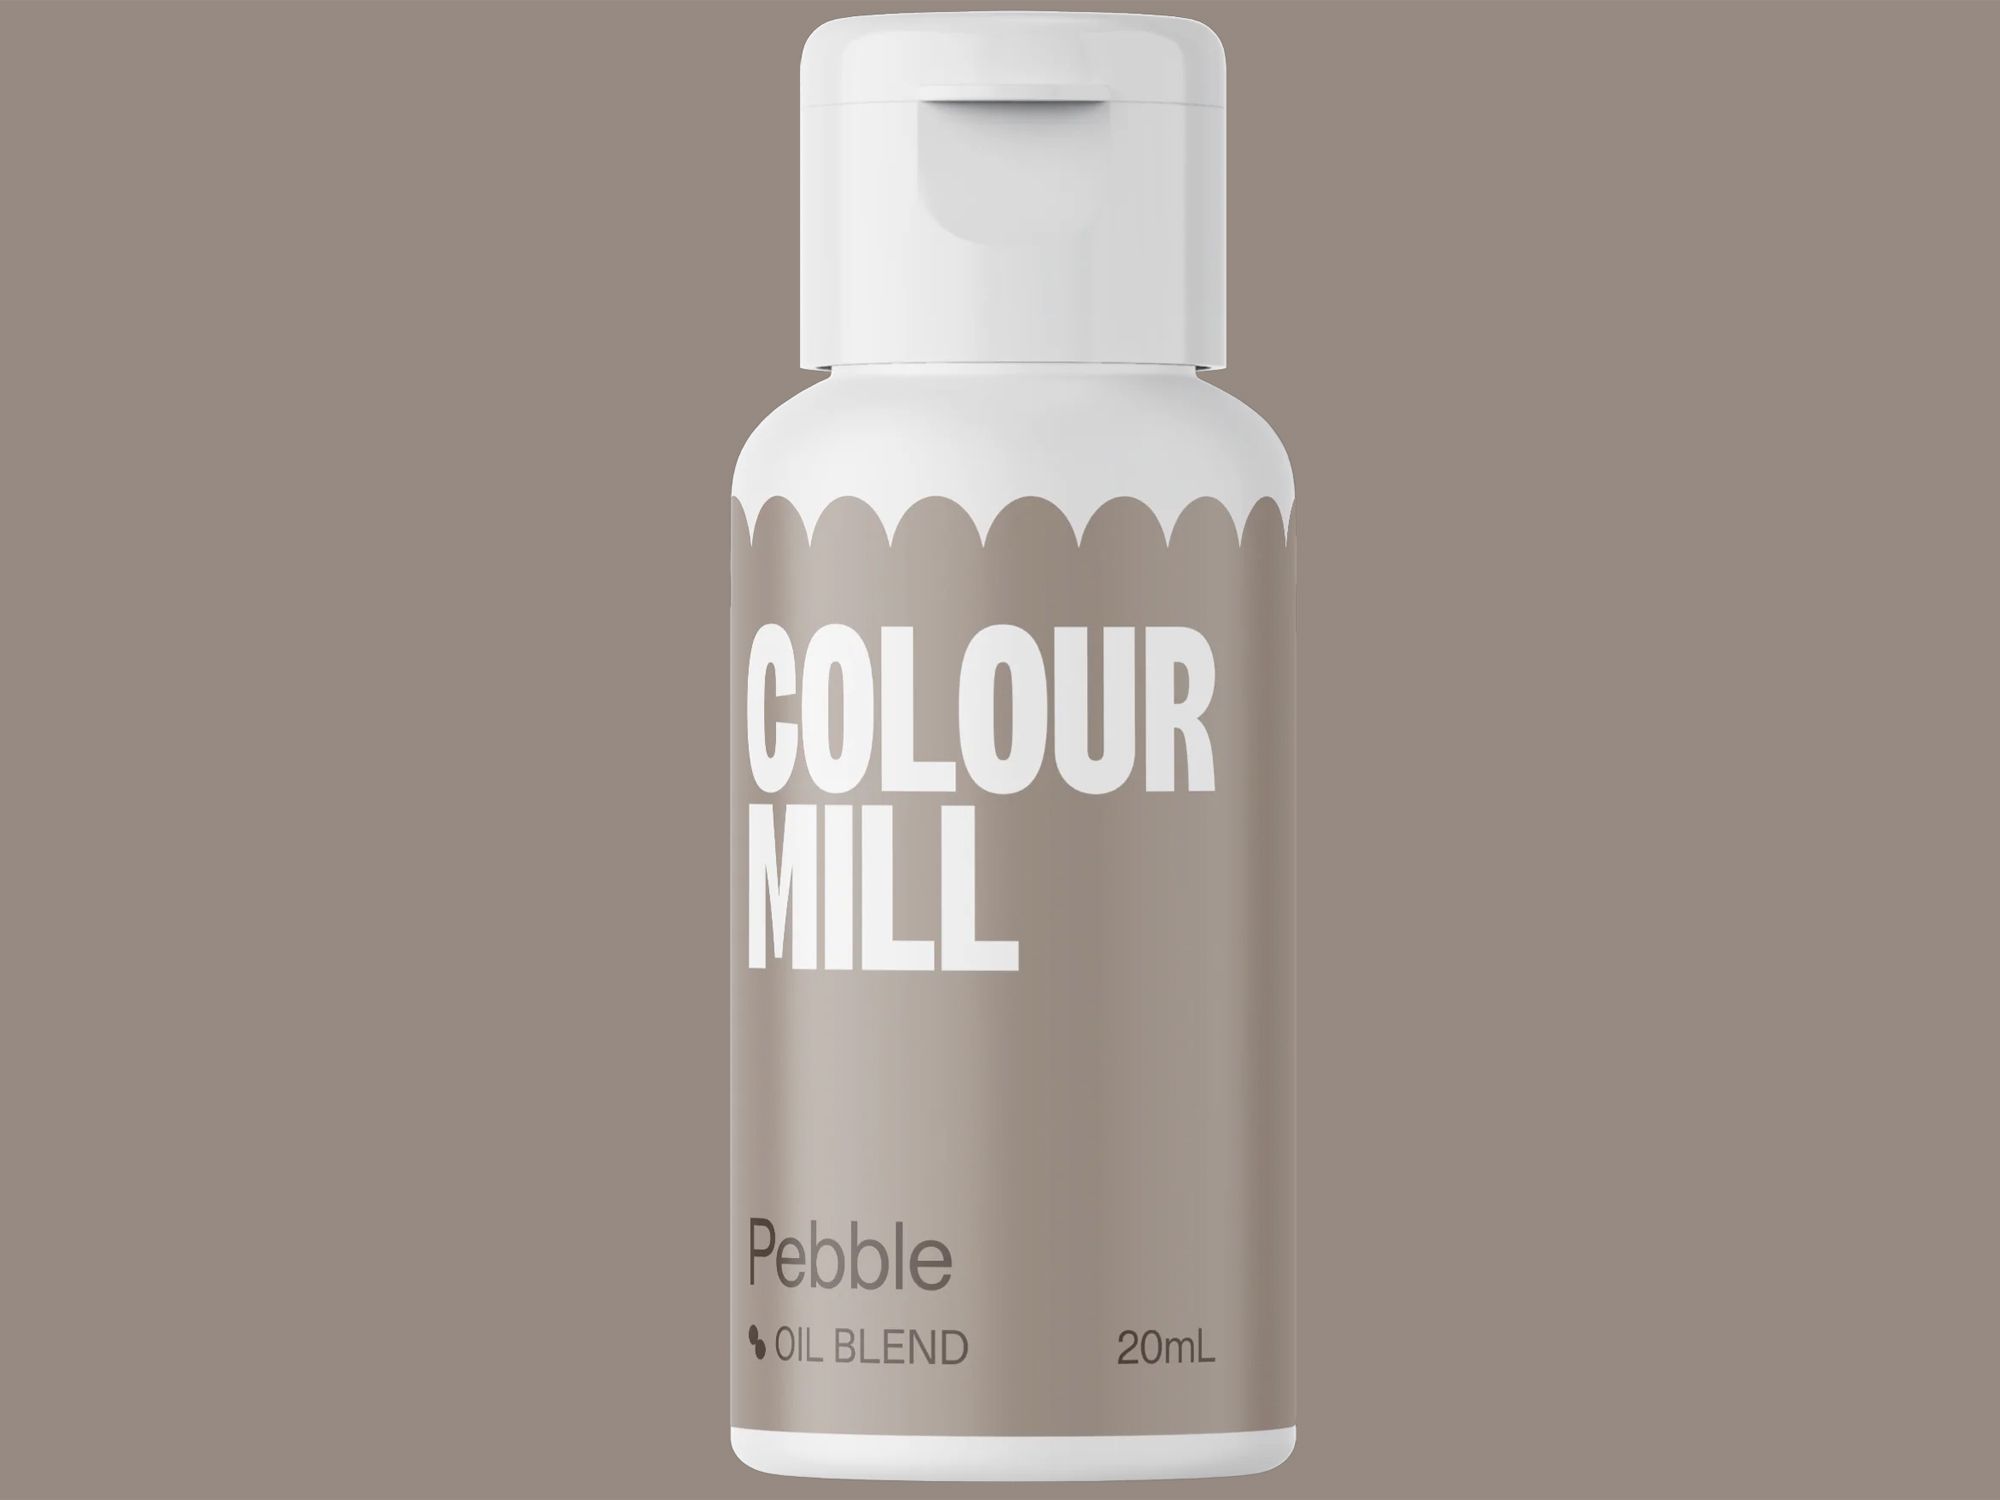 Colour Mill Pebble (Oil Blend) 20ml